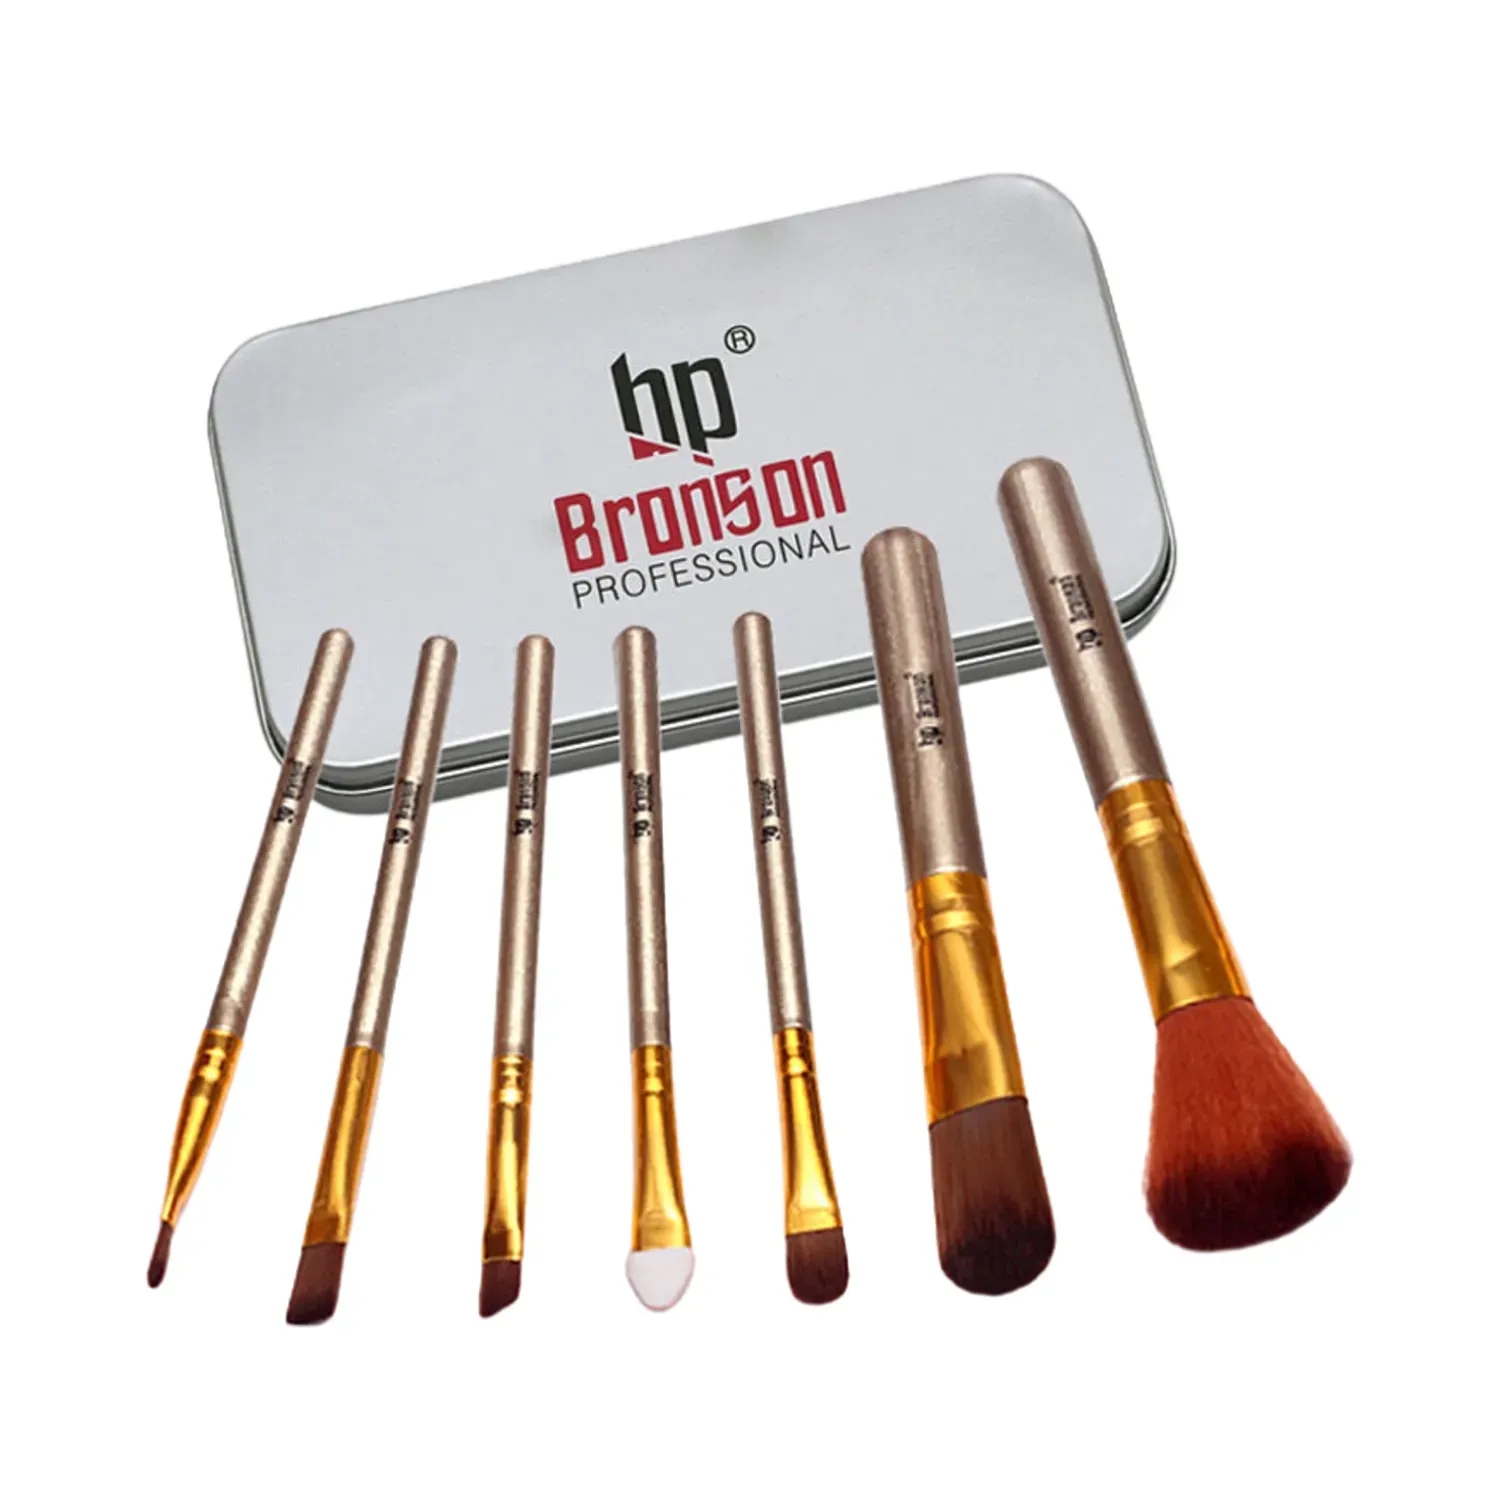 Bronson Professional Makeup Brush Set with Storage Box (7Pcs)